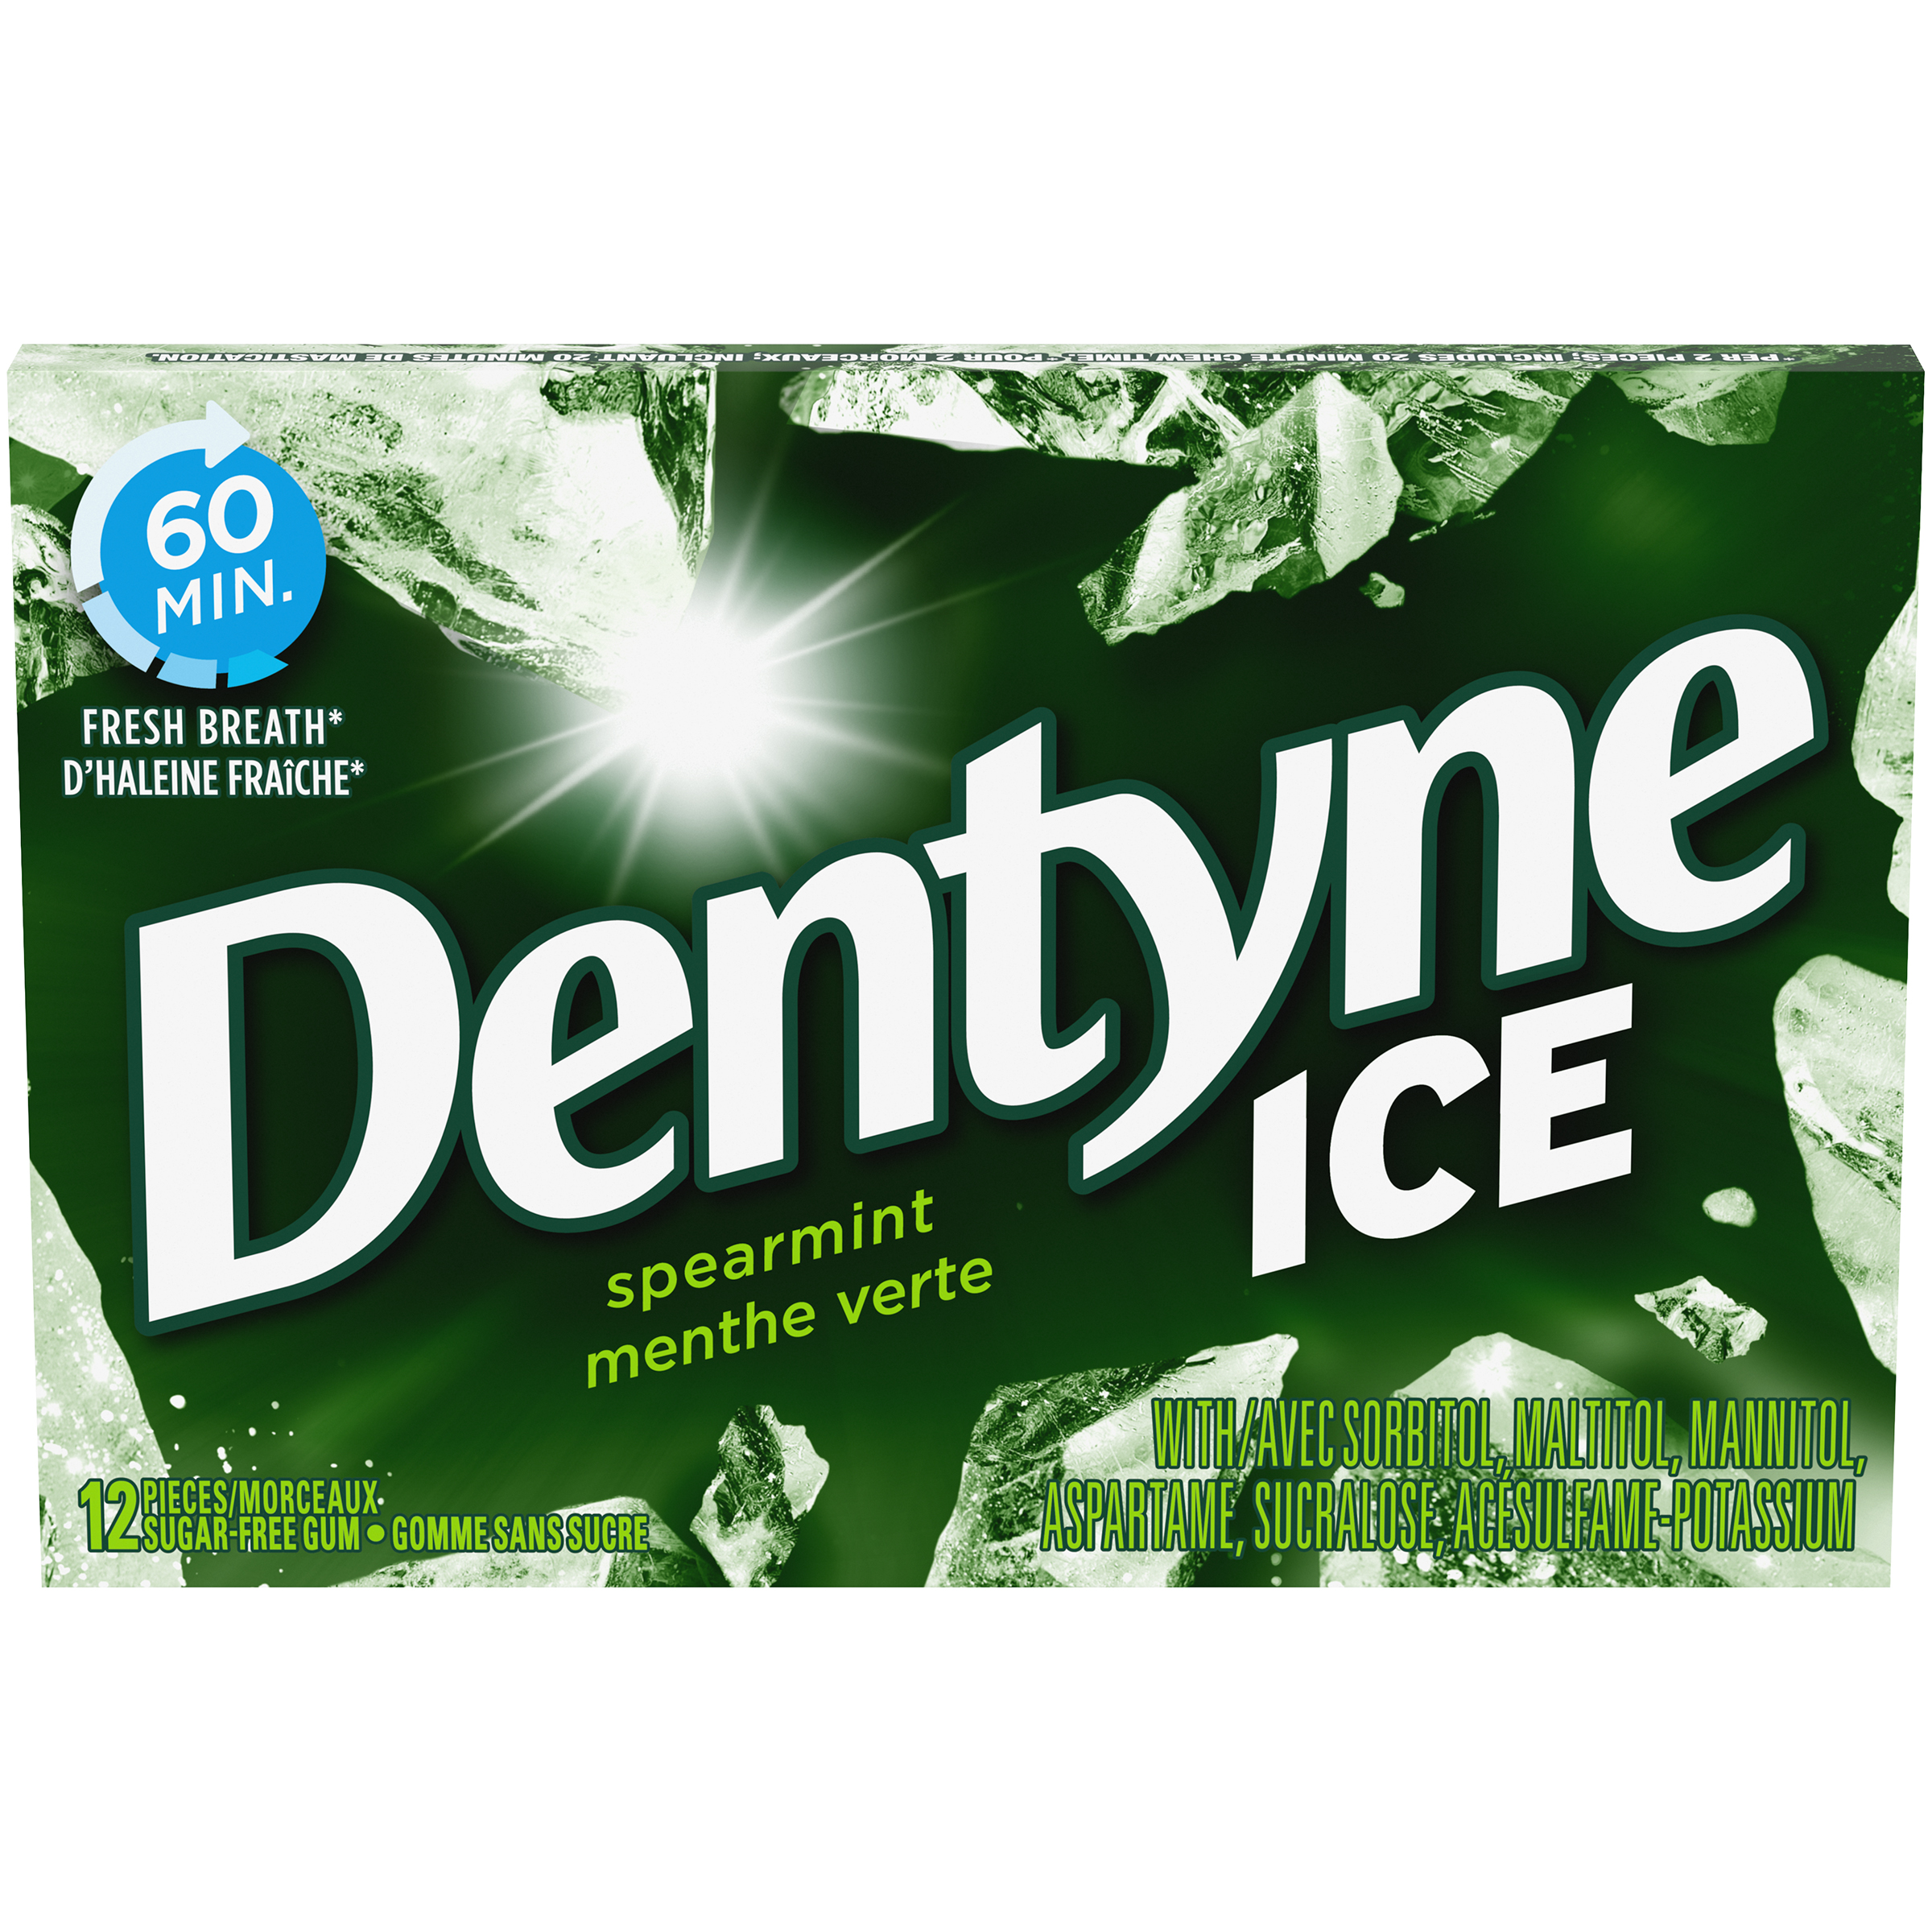 Dentyne Ice Spearmint Gum 12 Count